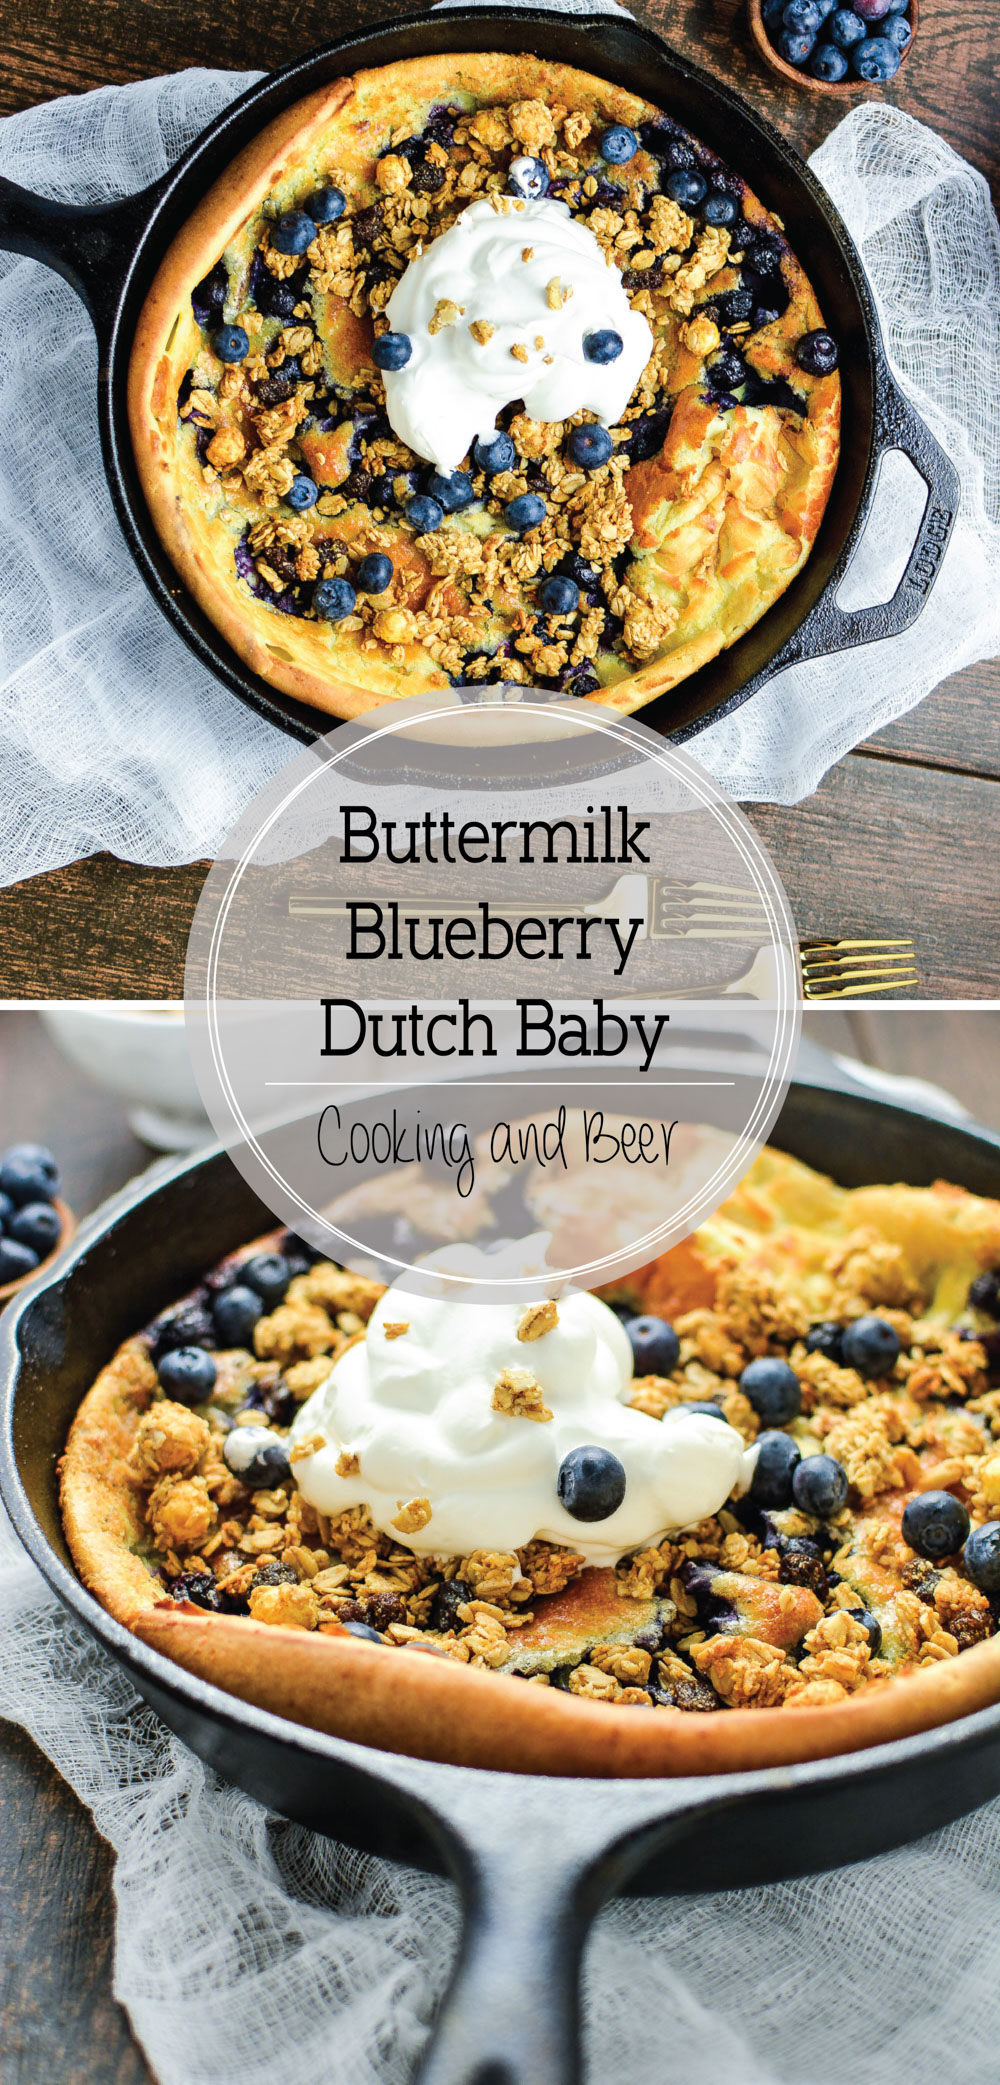 Buttermilk Blueberry Dutch Baby with Lemon Crema